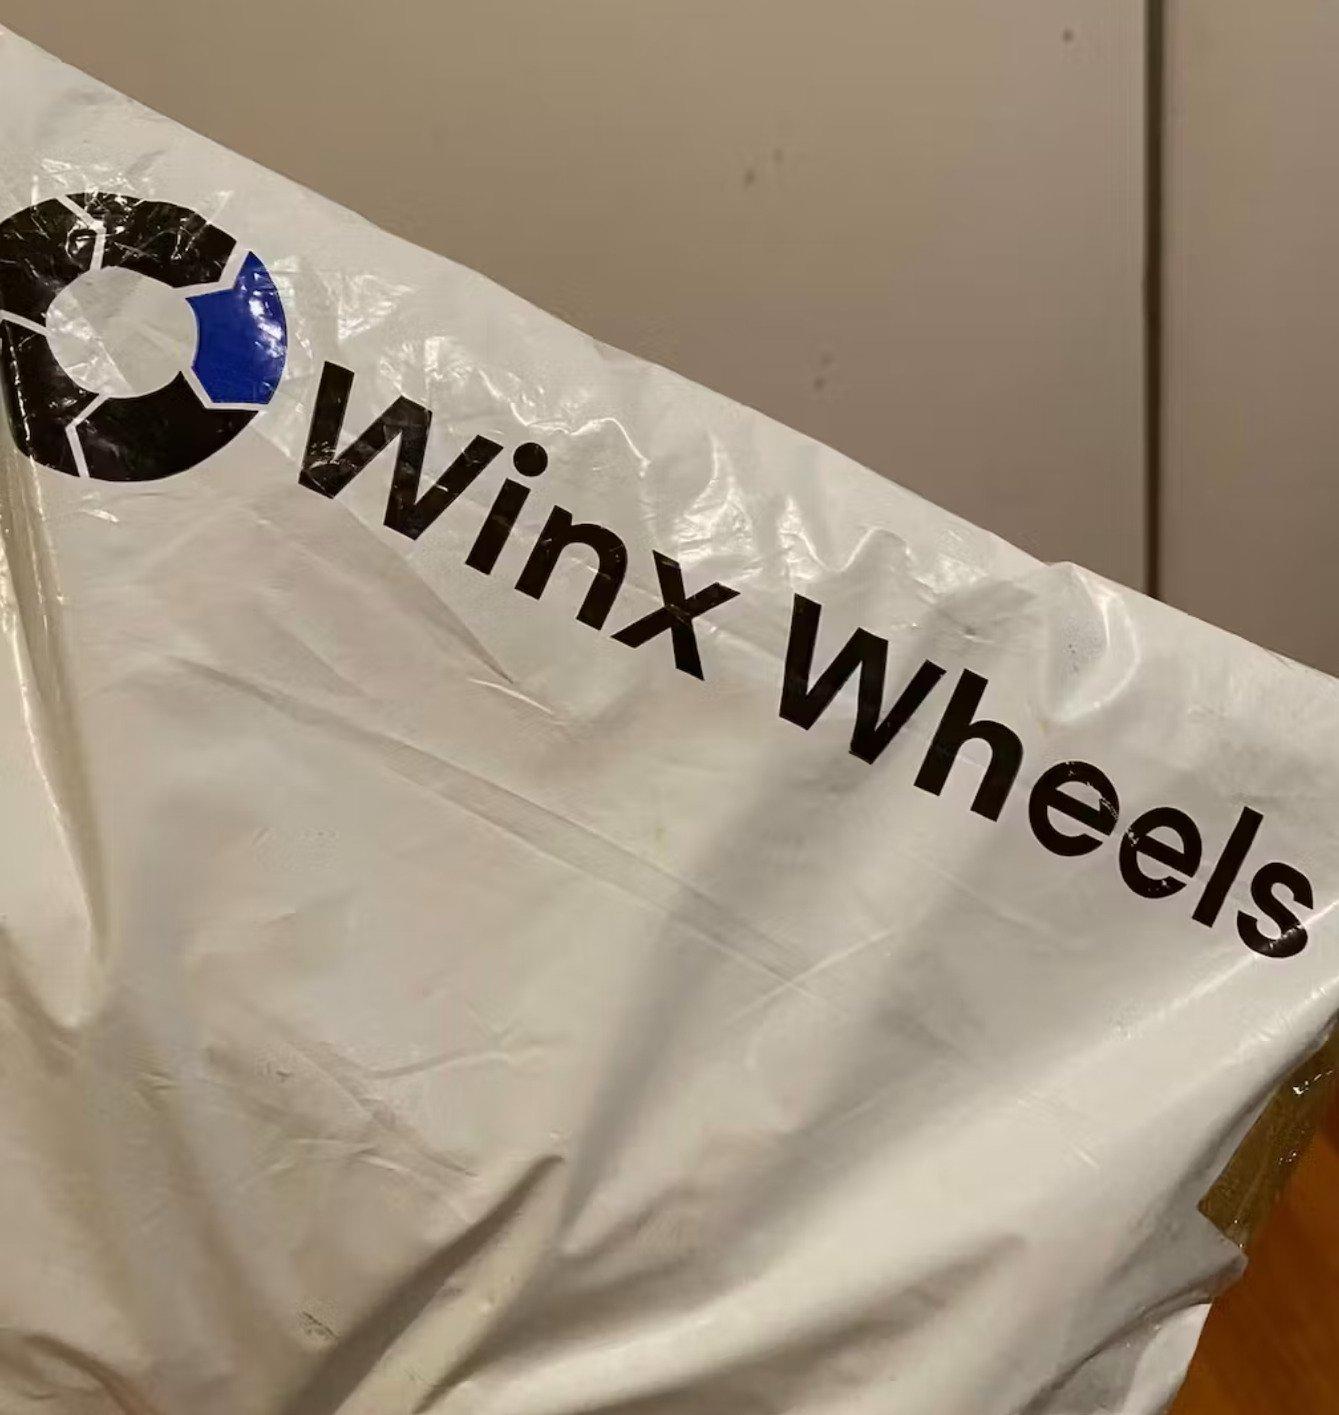 WINX WHEELS - MSS Ecom PTY LTD Trademark Registration